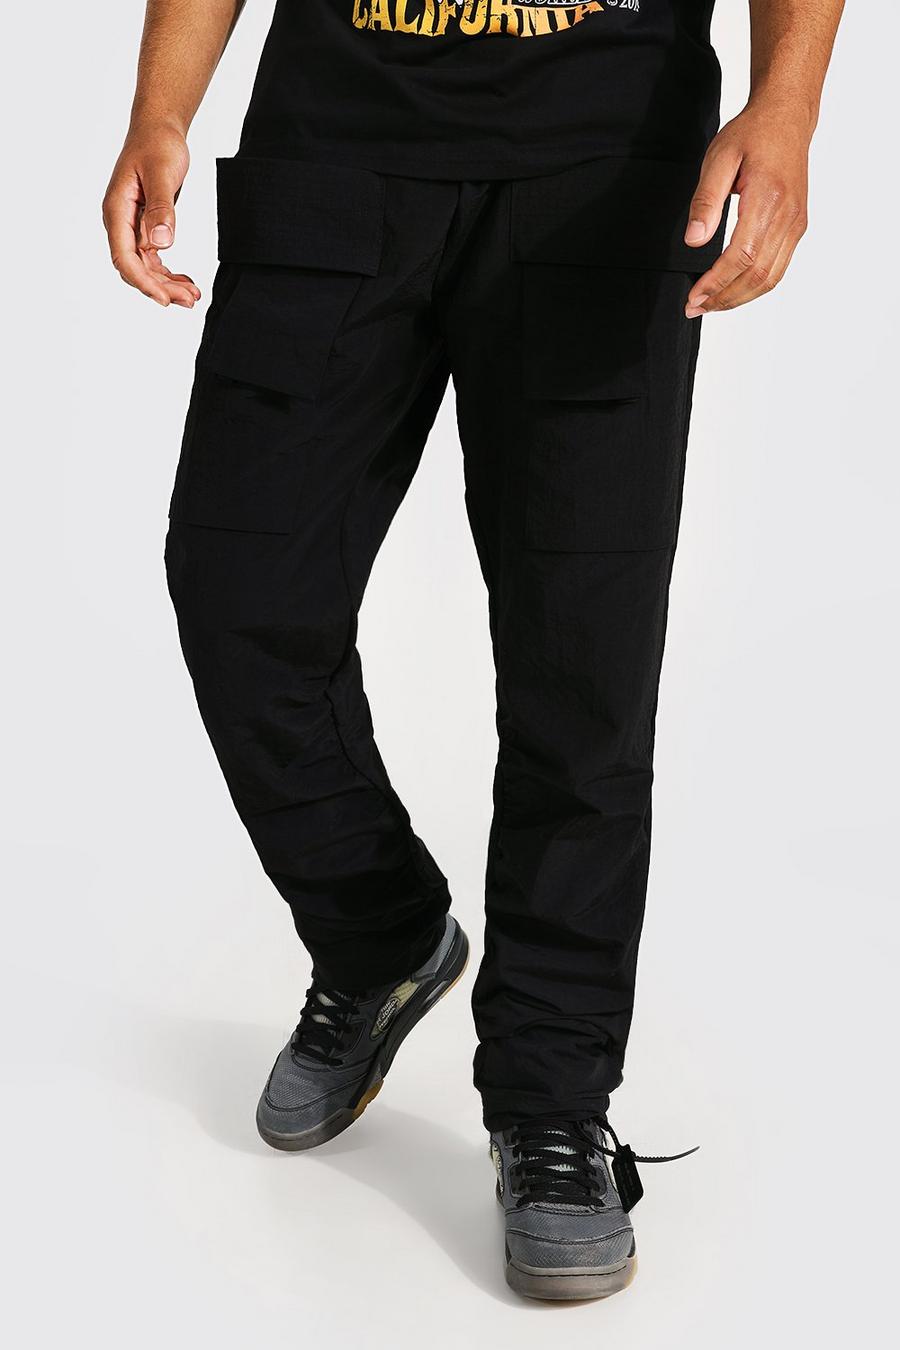 Black Tall Slim Leg Trouser With Pocket Detail image number 1